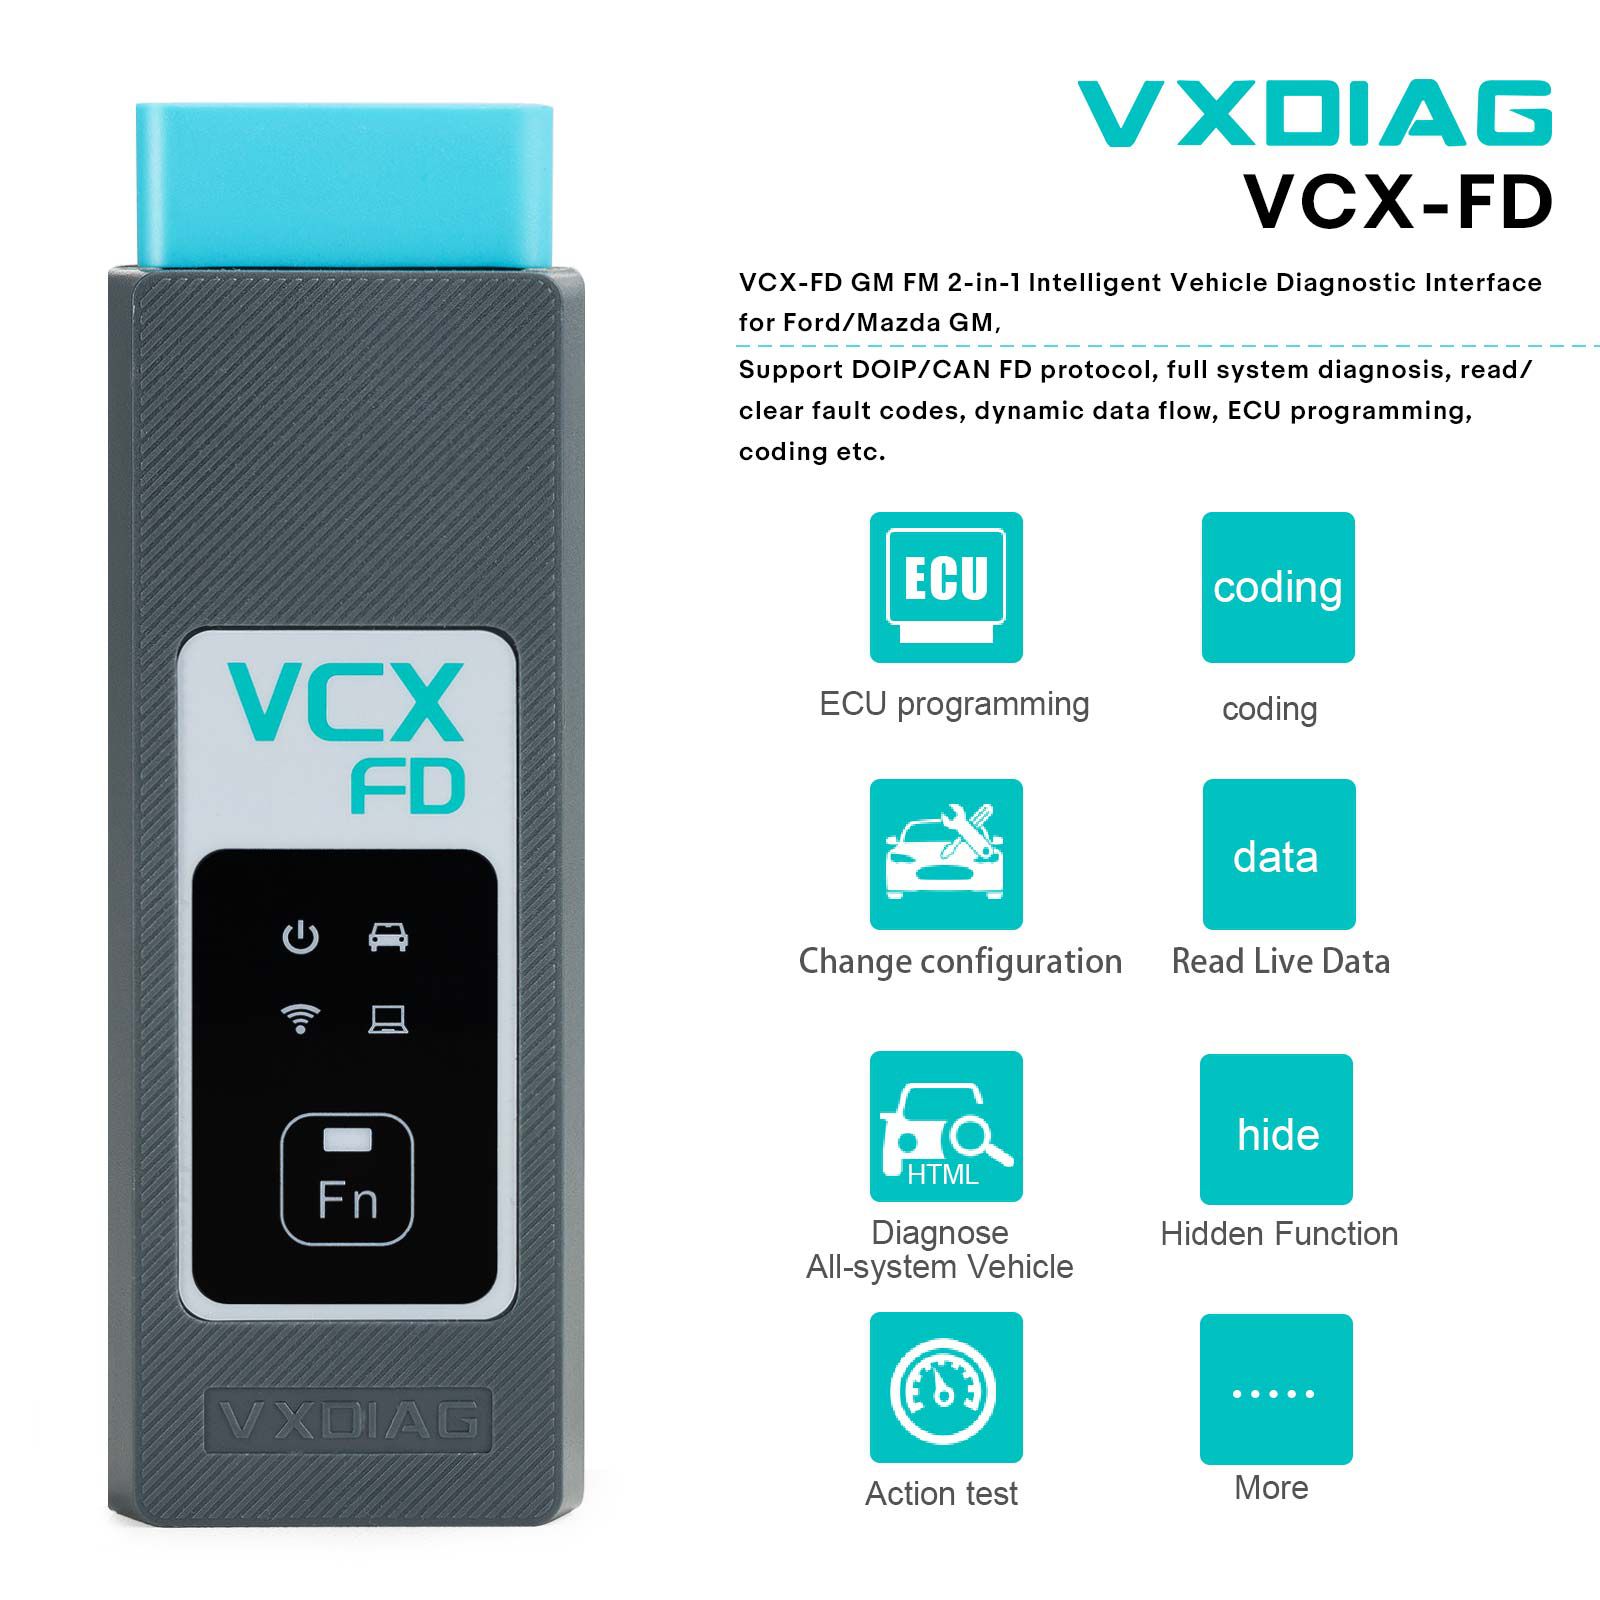 VXDIAG VCX-FD for GM and Ford/Mazda 2-in-1 Intelligent Diagnostic Interface